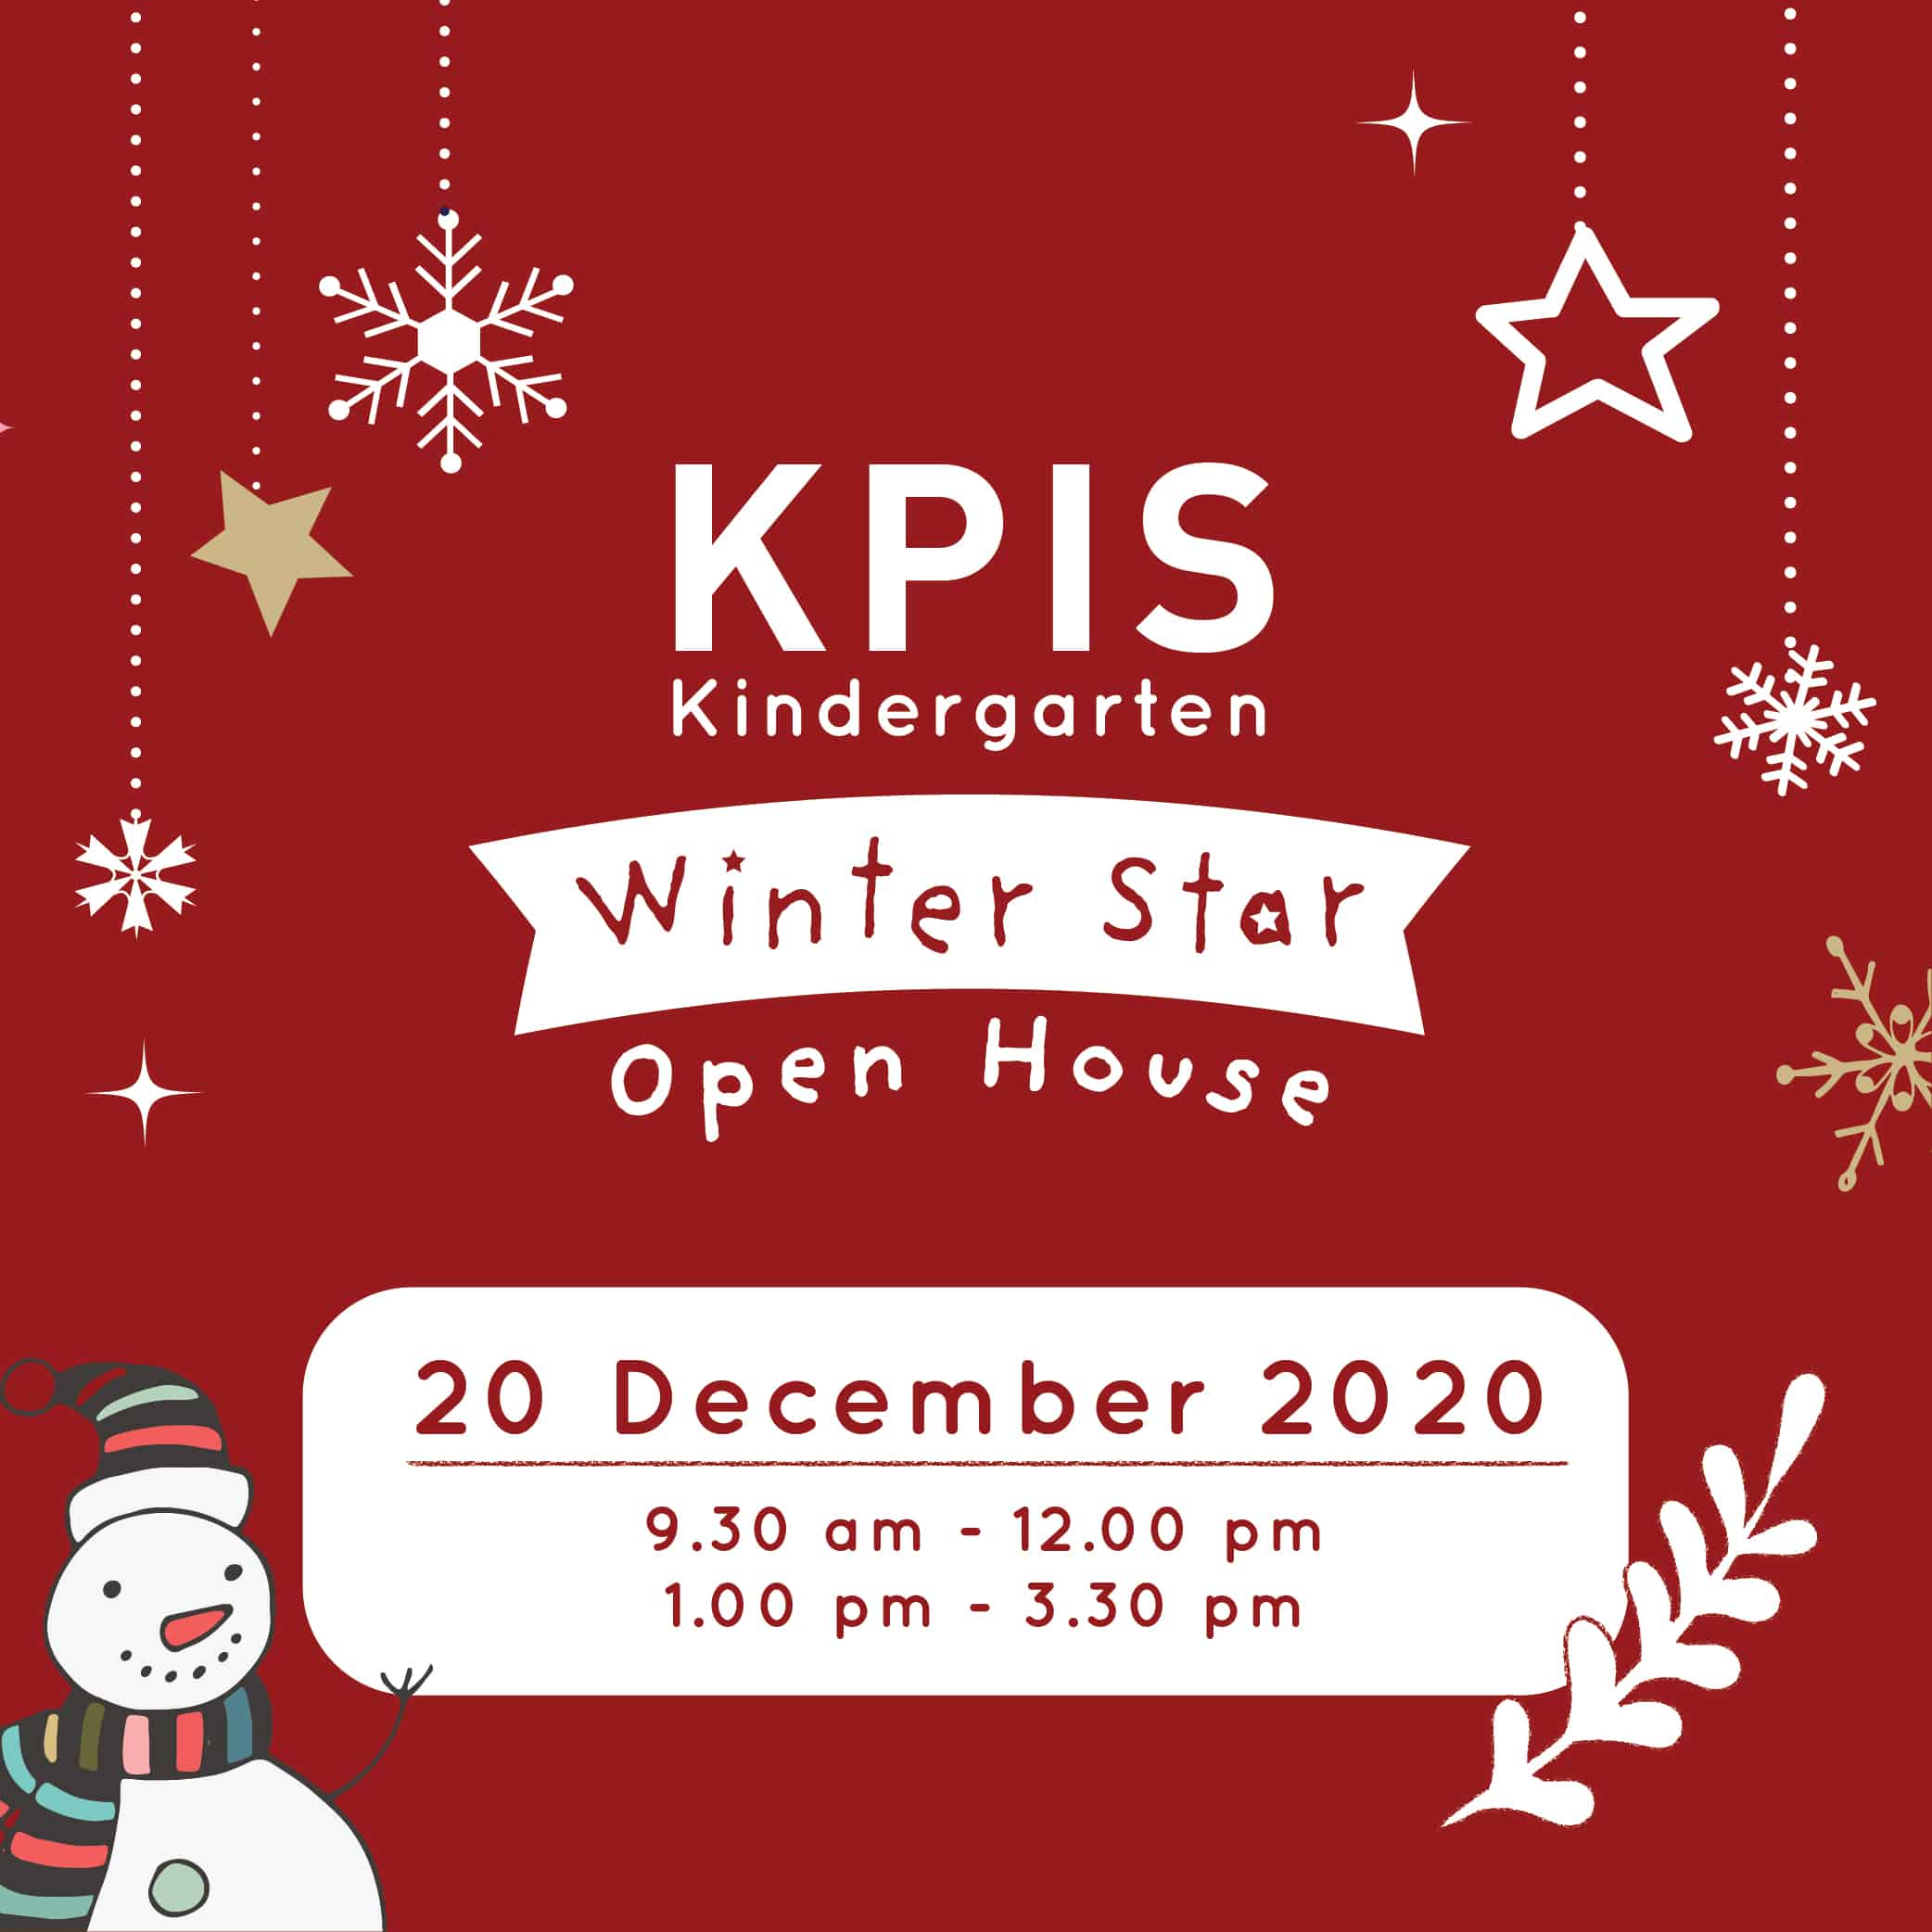 KPIS Kindergarten Winter Star Open House